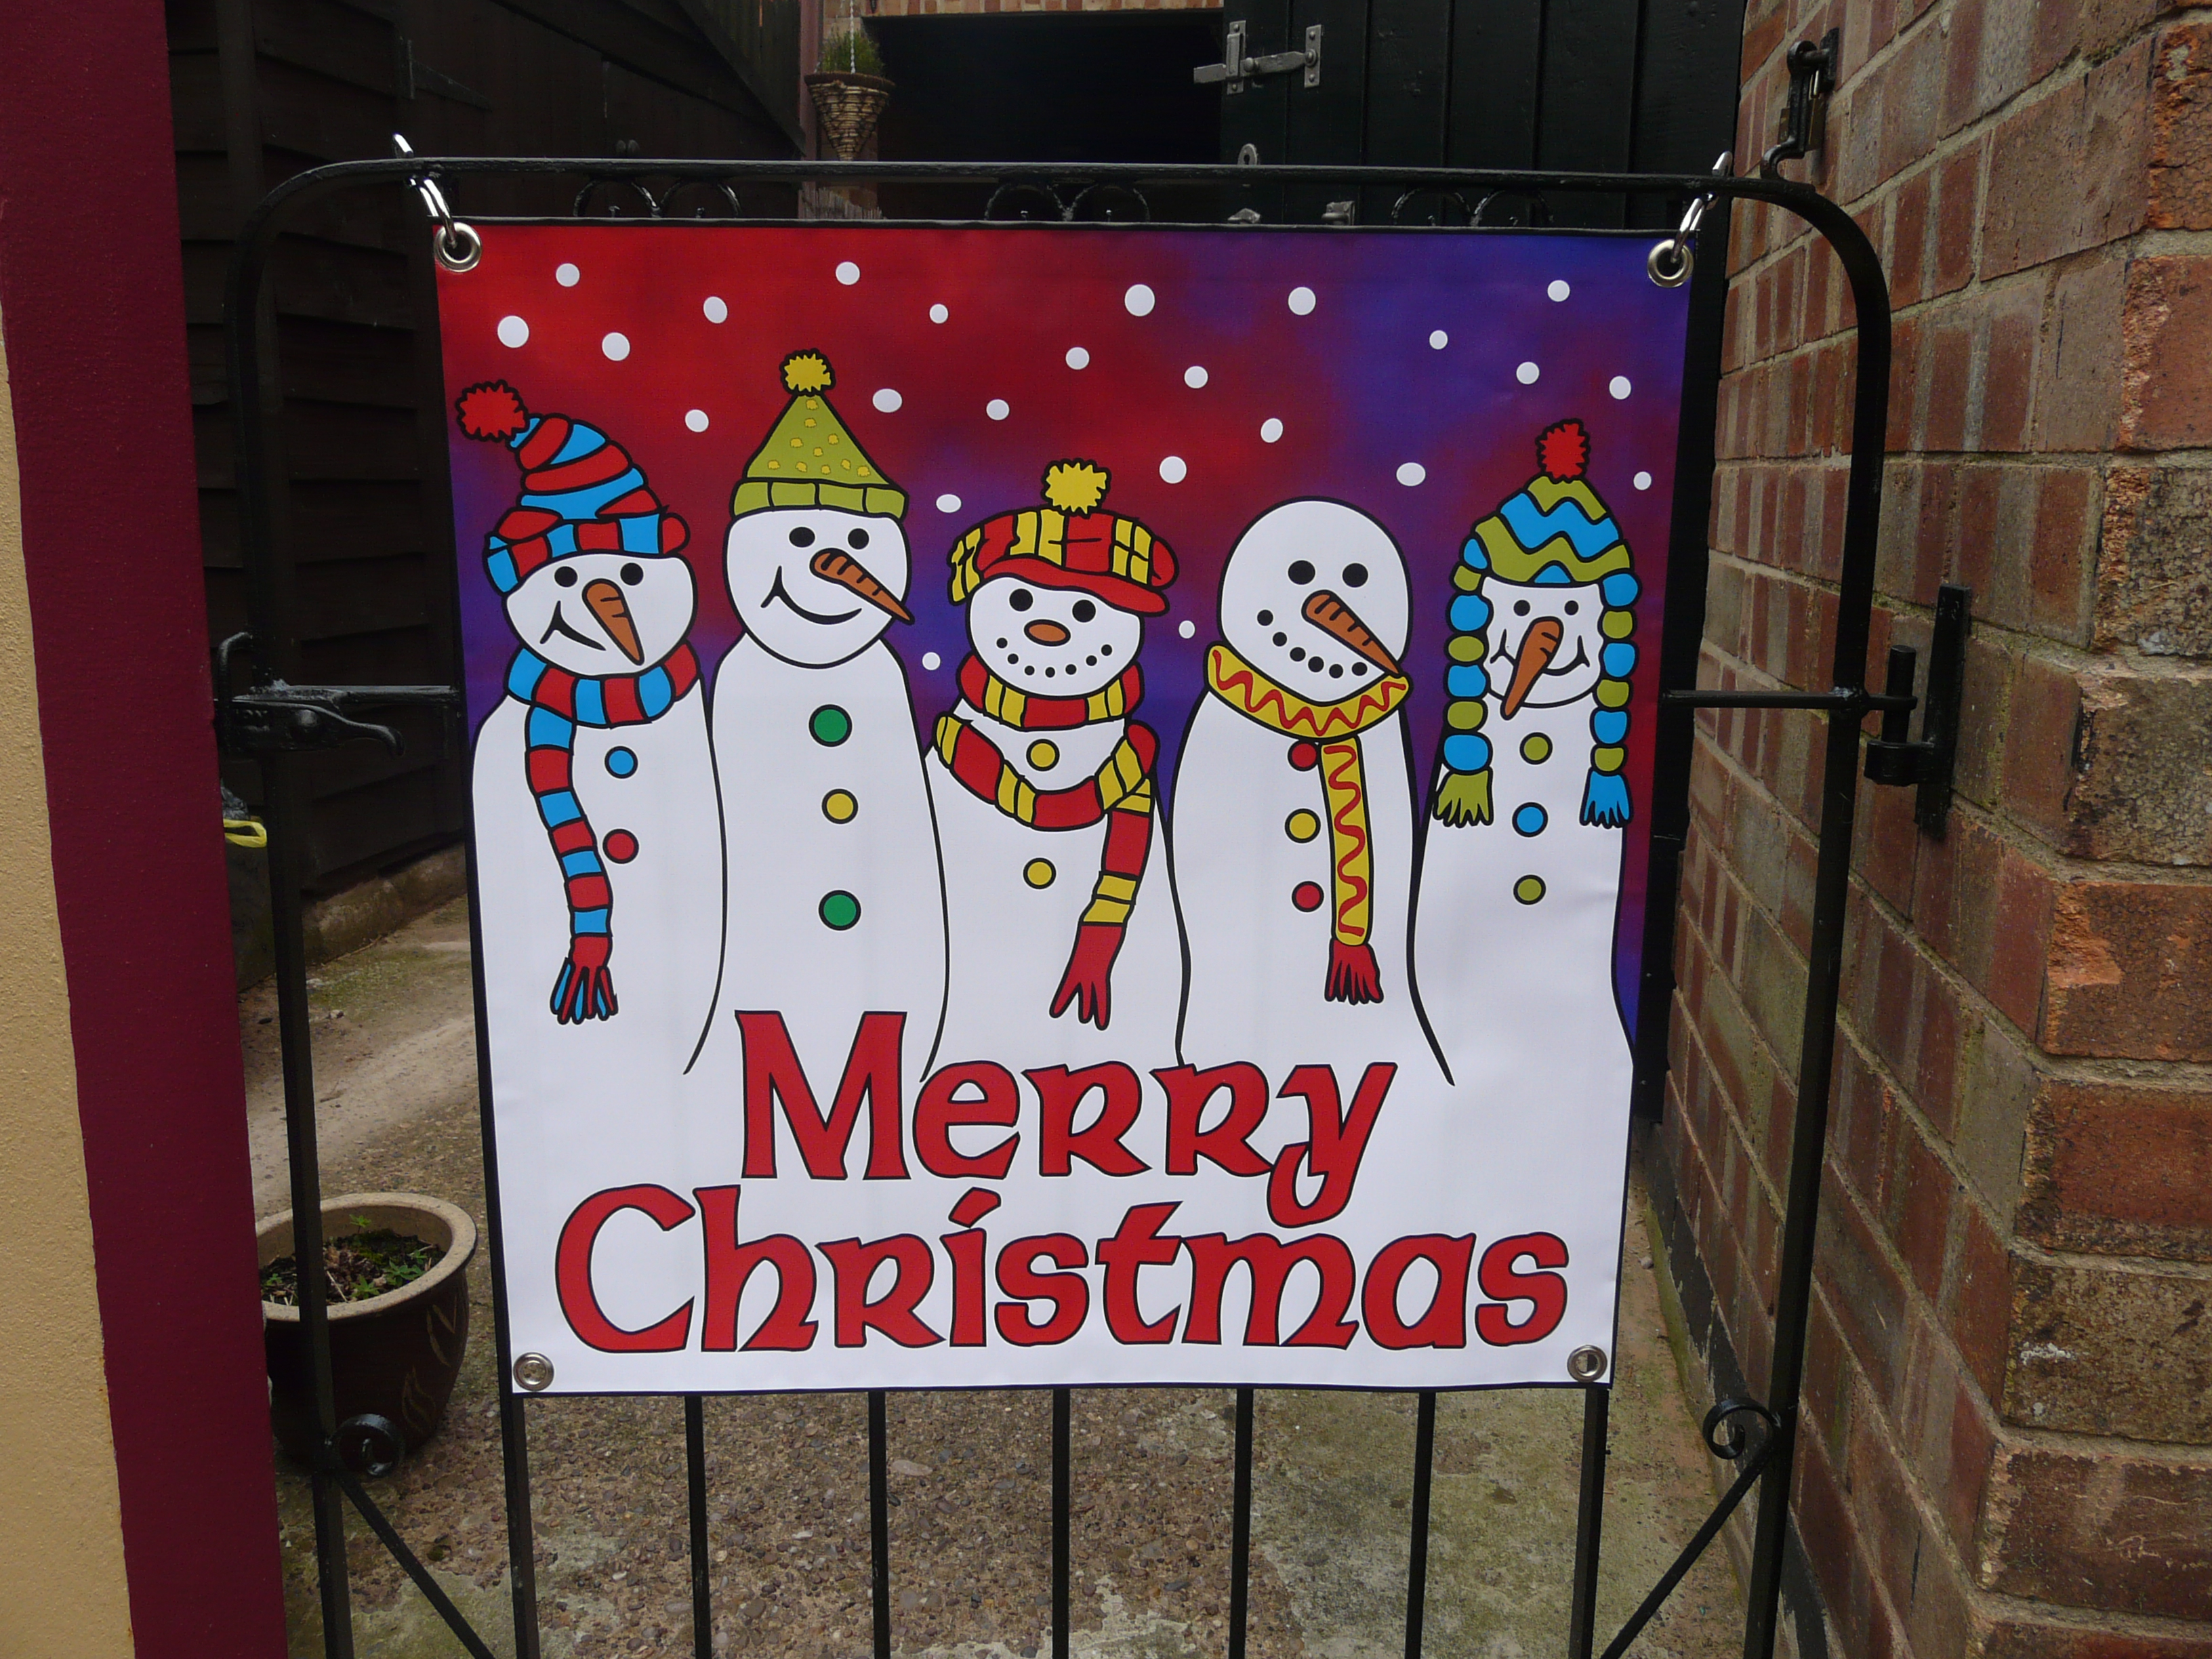 Merry Christmas decorative banner